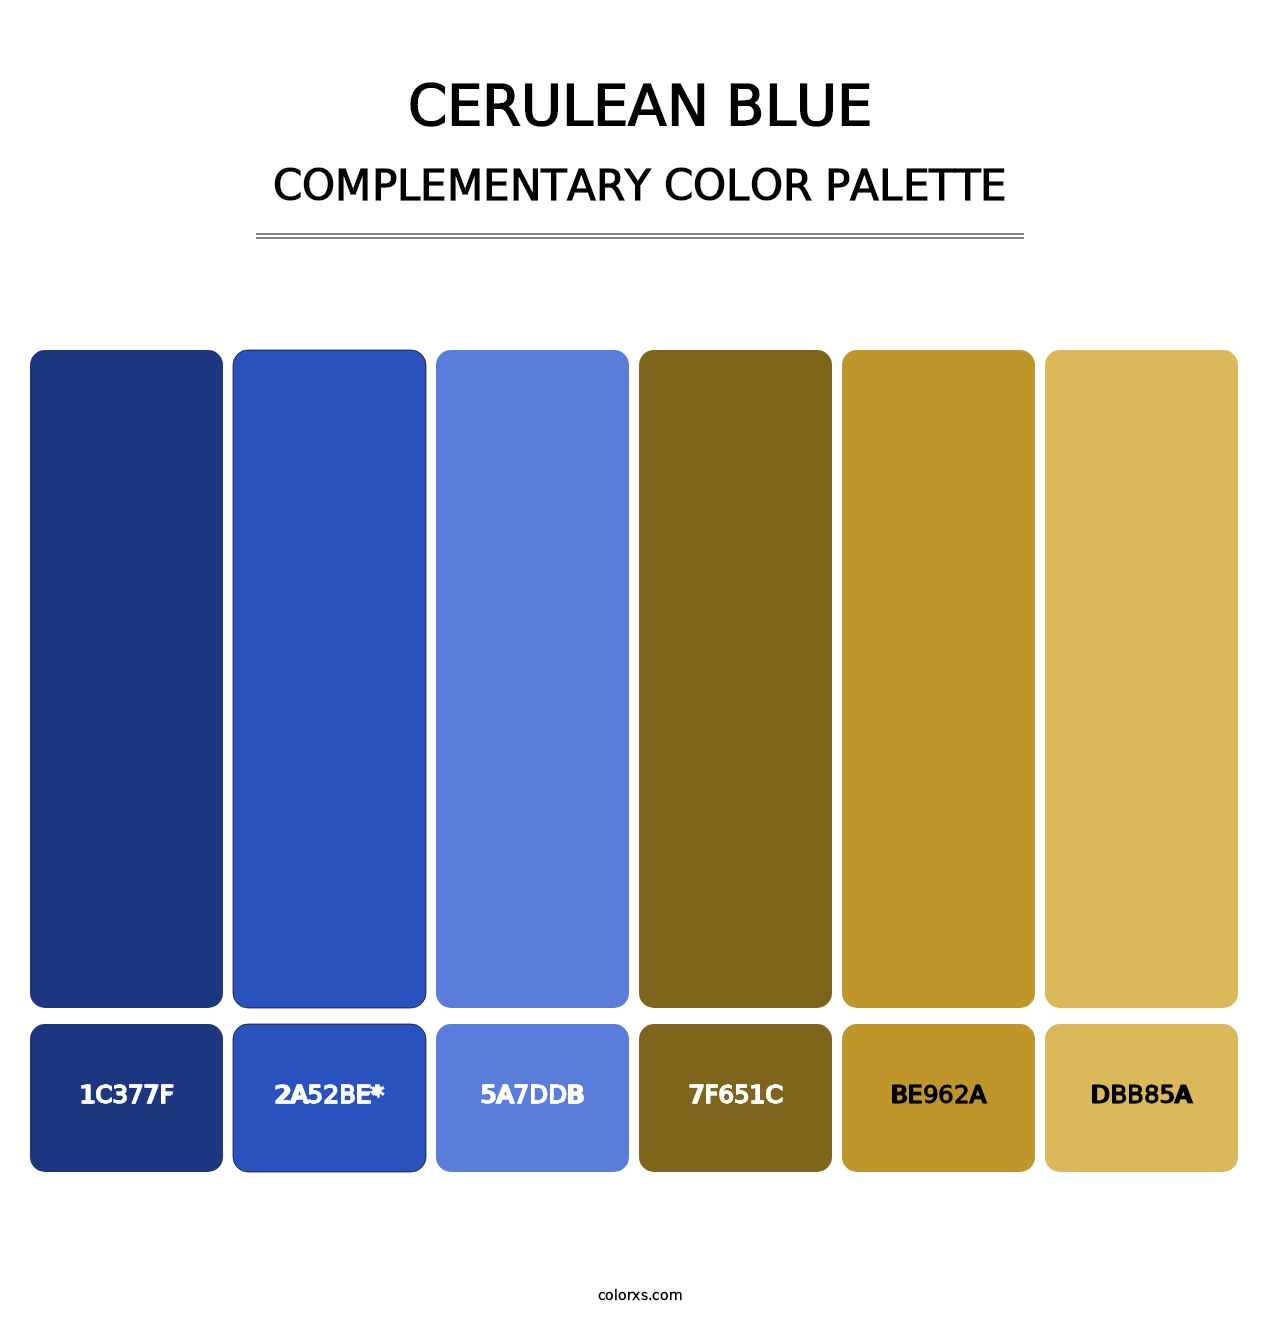 Cerulean blue - Complementary Color Palette